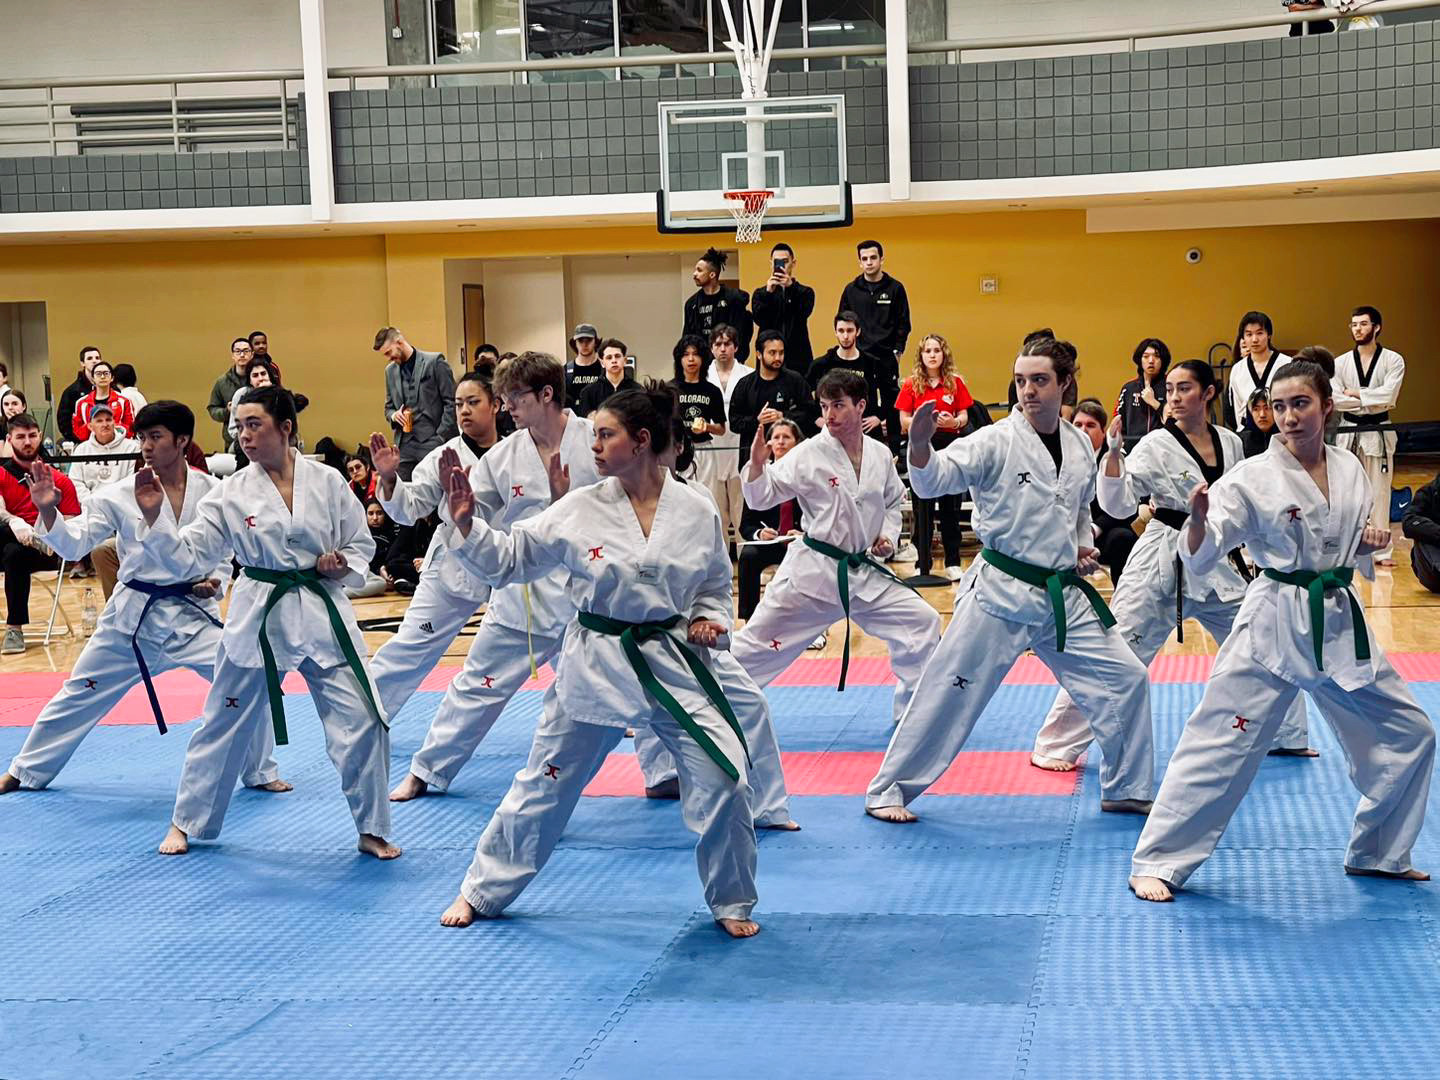 United States, France and Japan name taekwondo teams for Chengdu 2021